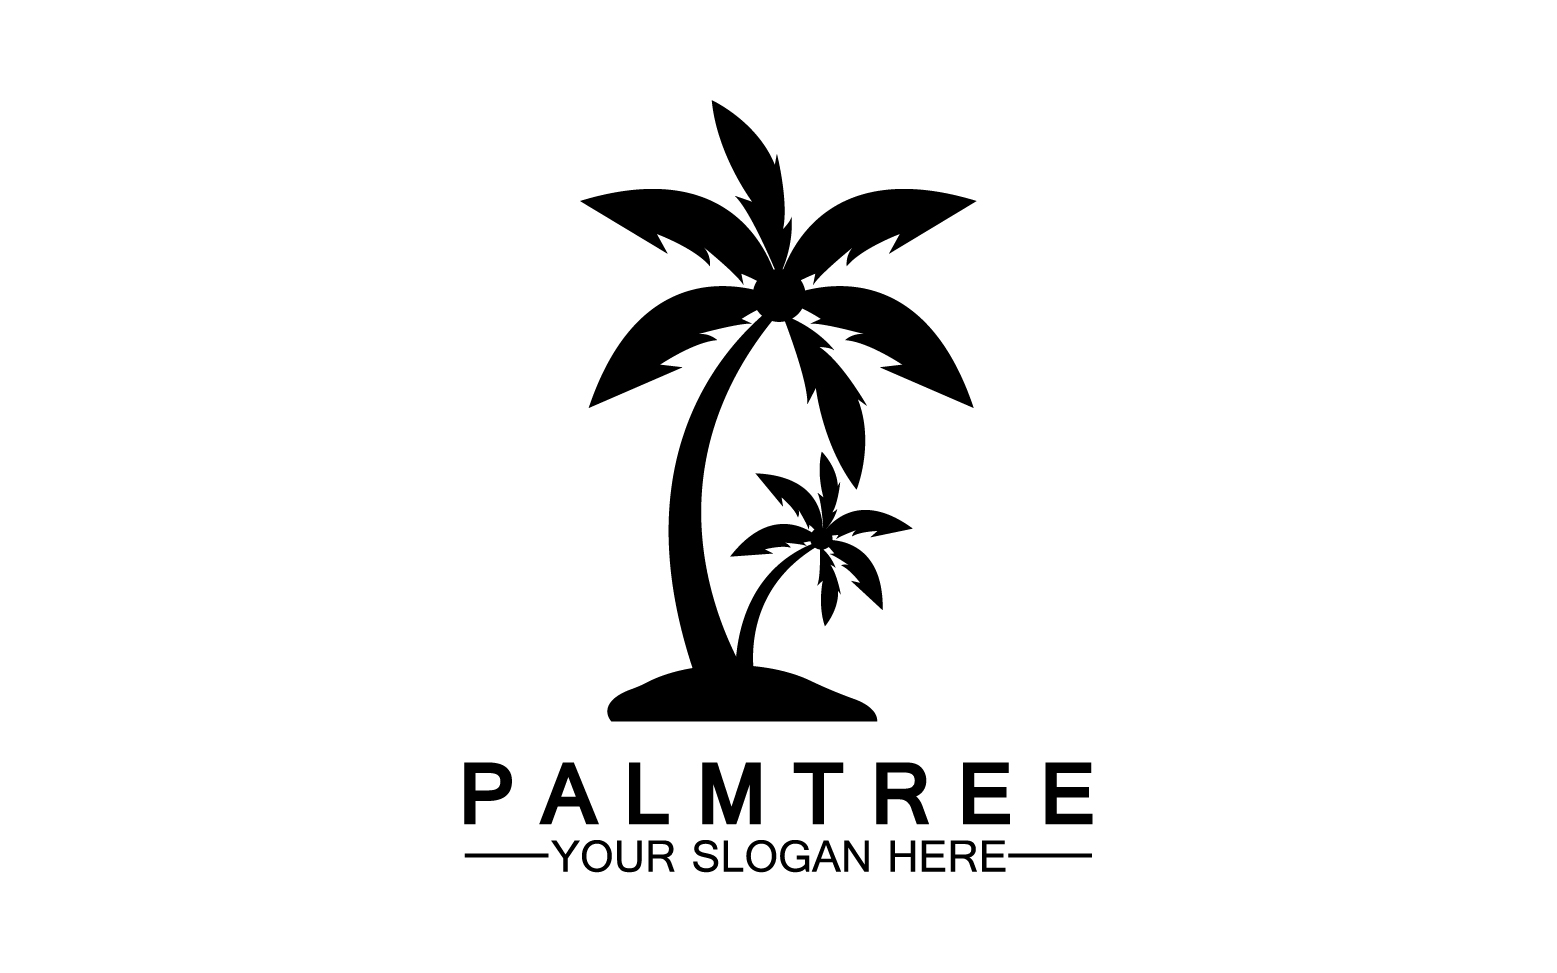 Palm tree hipster vintage logo vector icon illustration v2